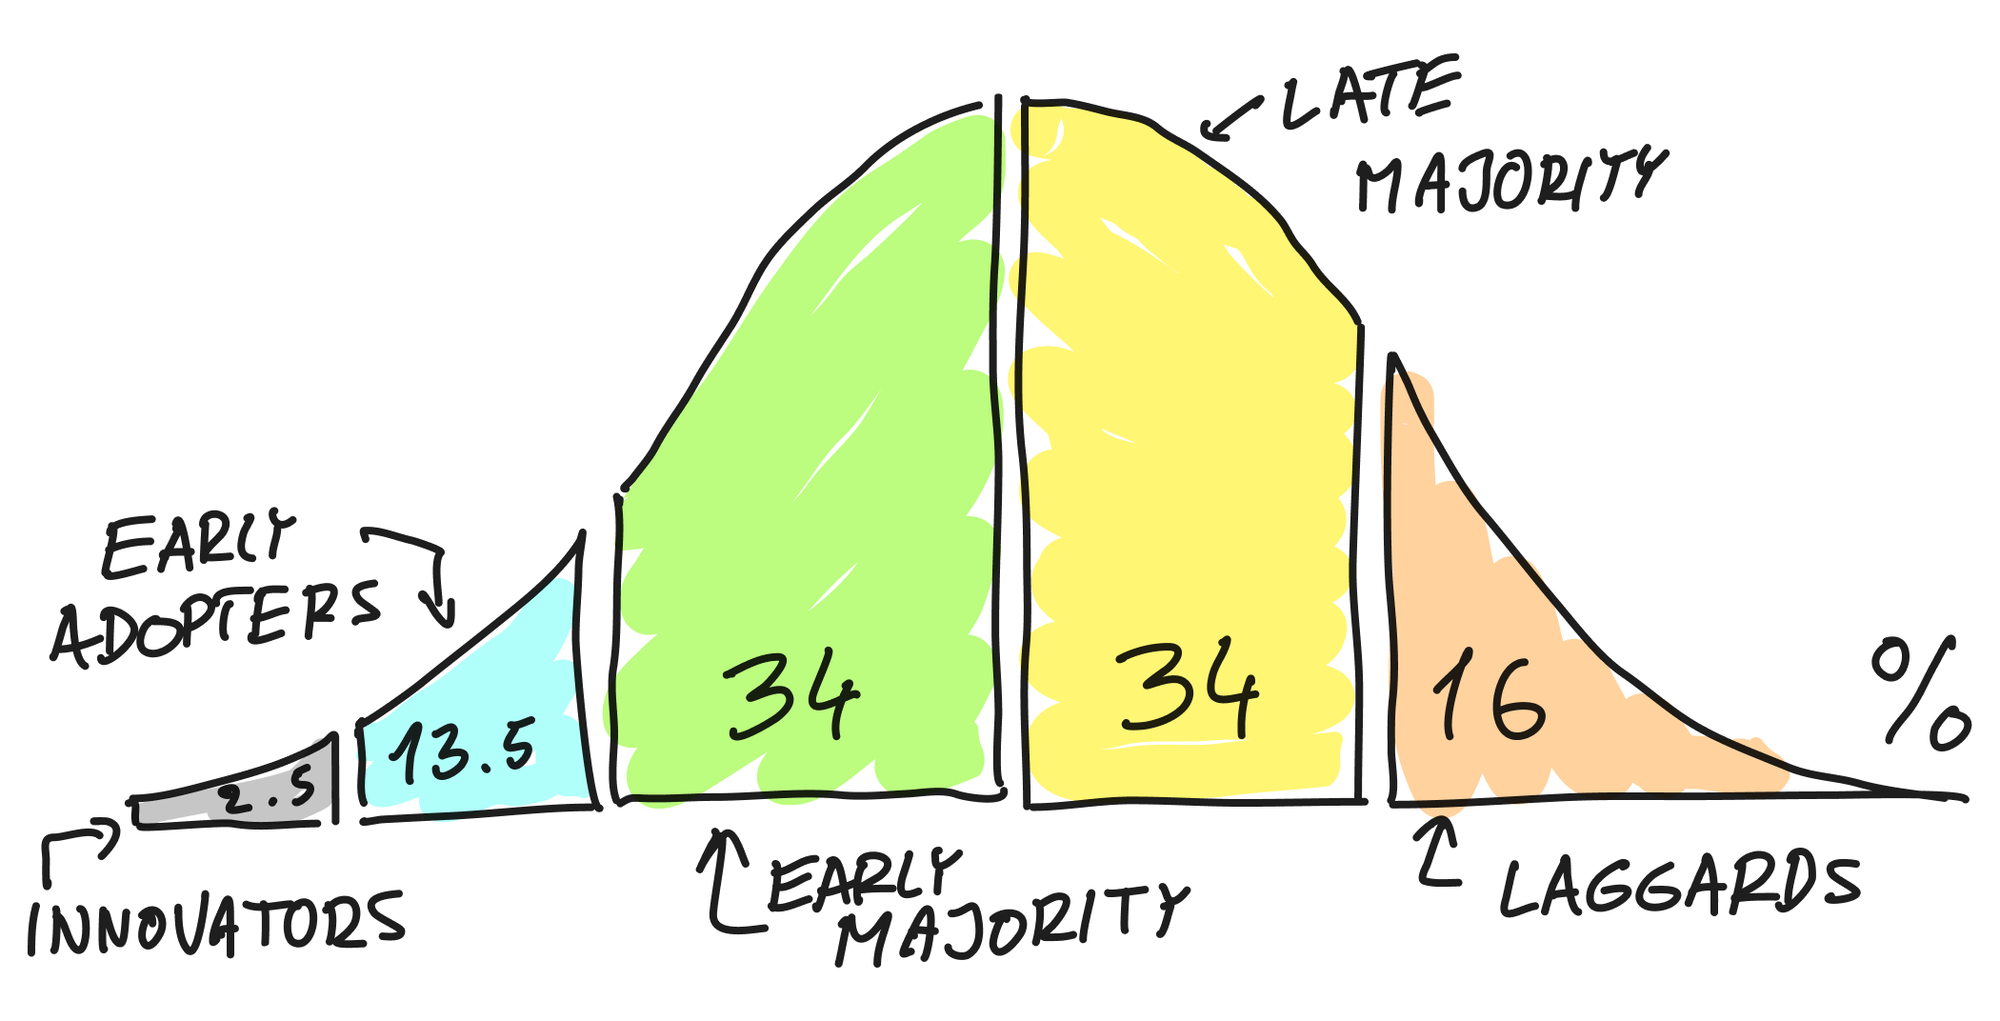 Gauss curve of technology adoption.